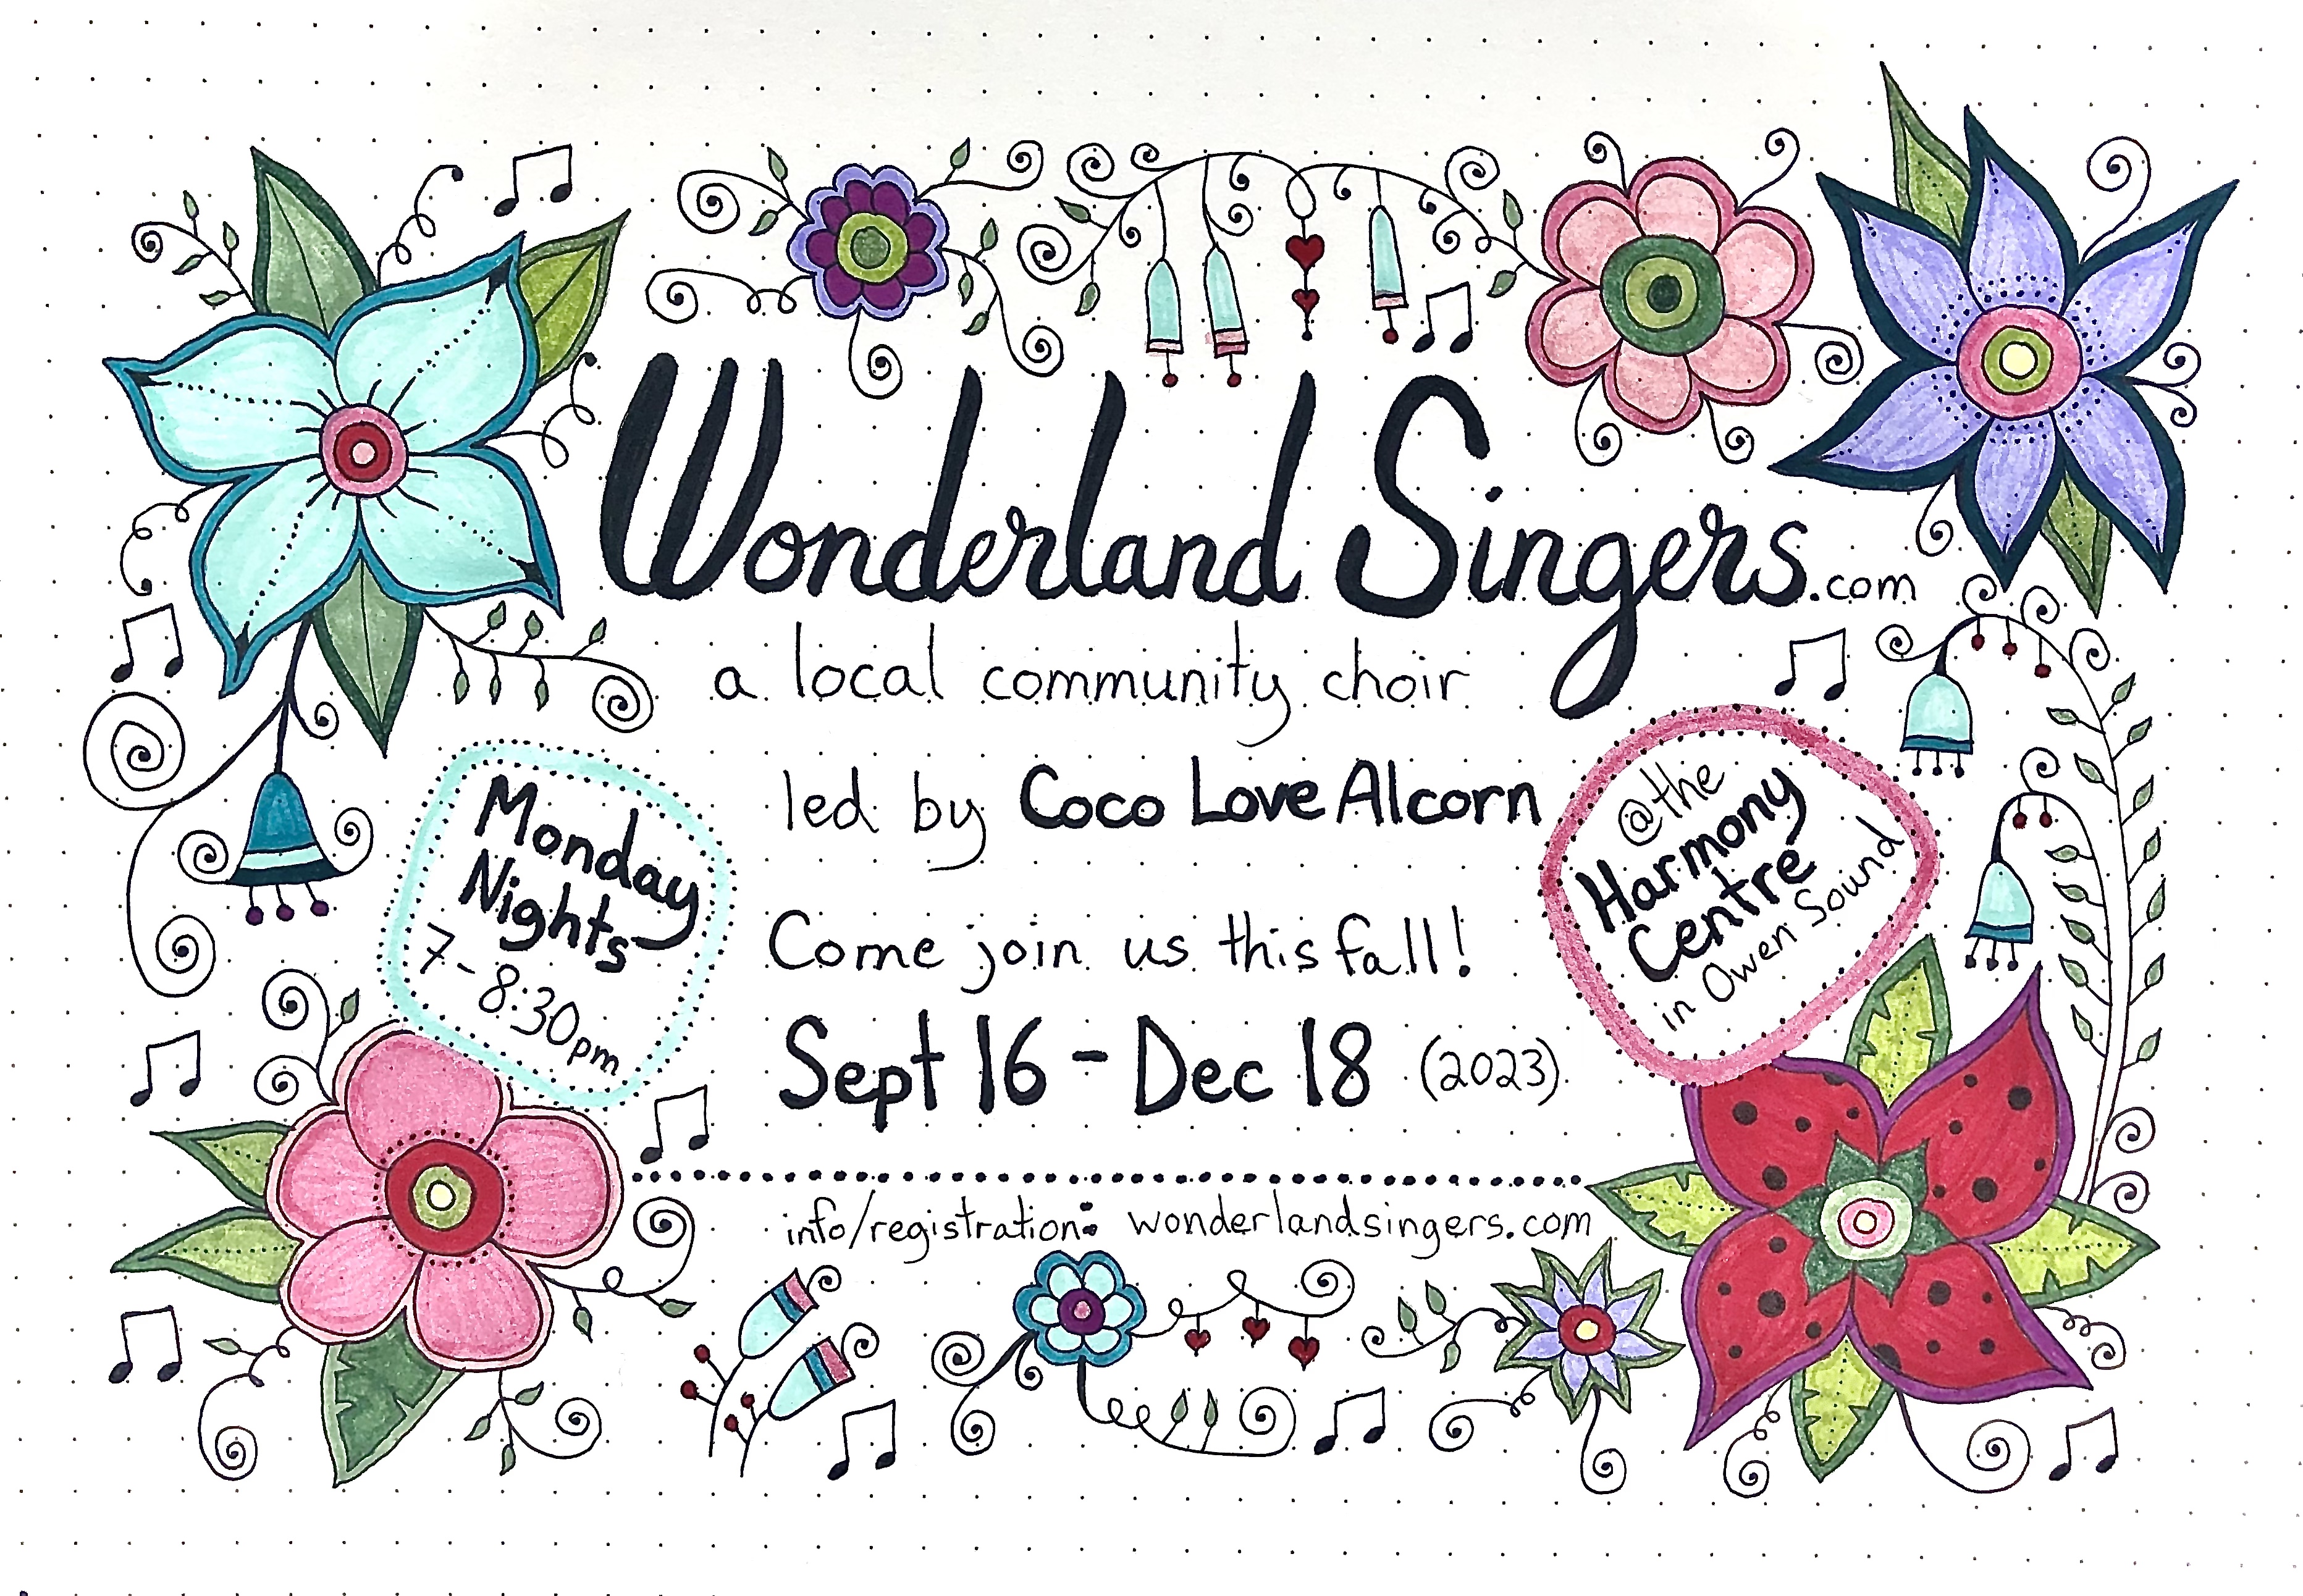 Event image Wonderland Singers community choir